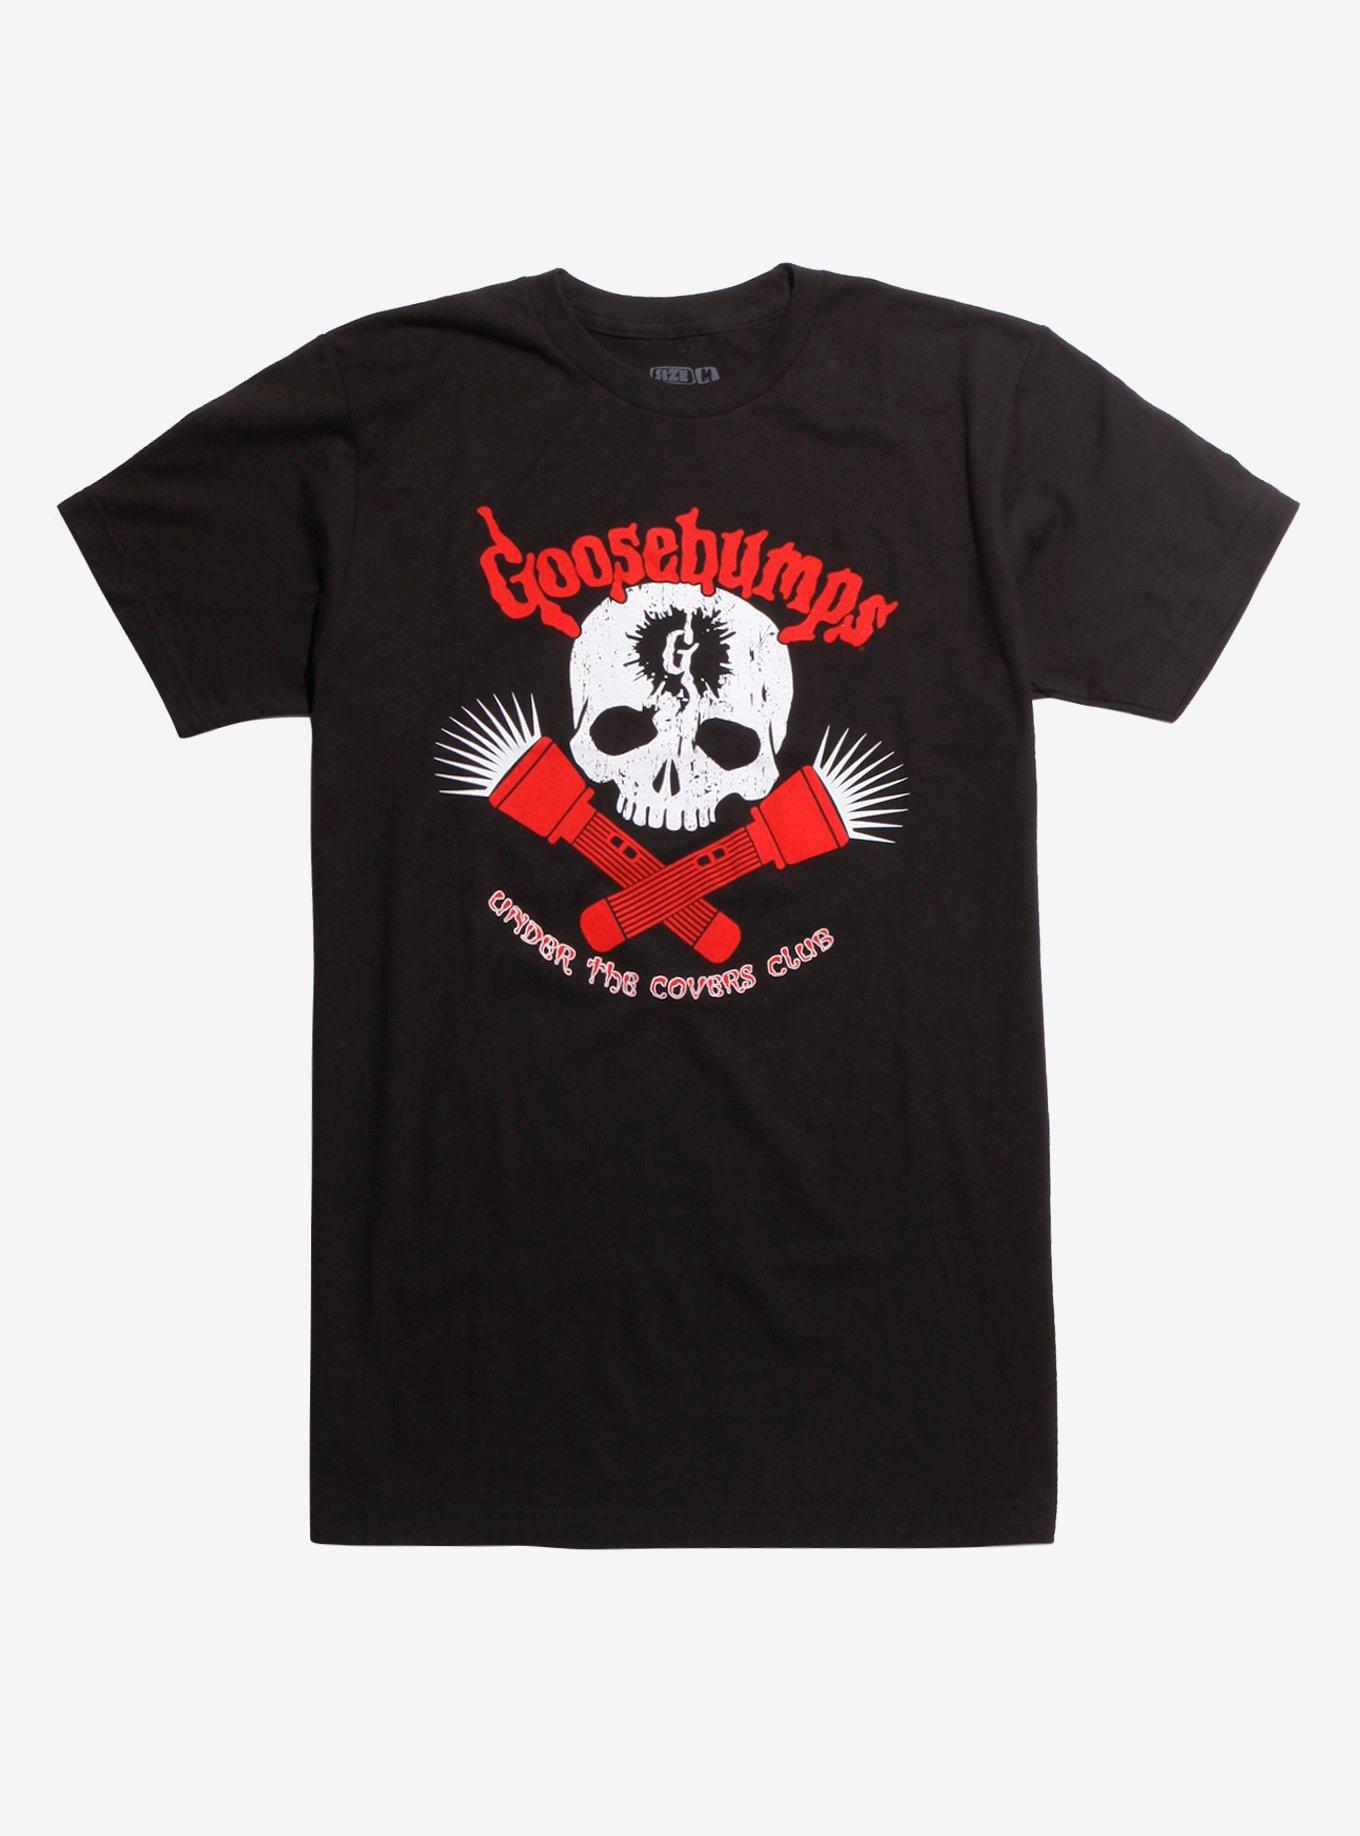 Goosebumps Under The Covers Club Flashlight T- Shirt, MULTI, hi-res